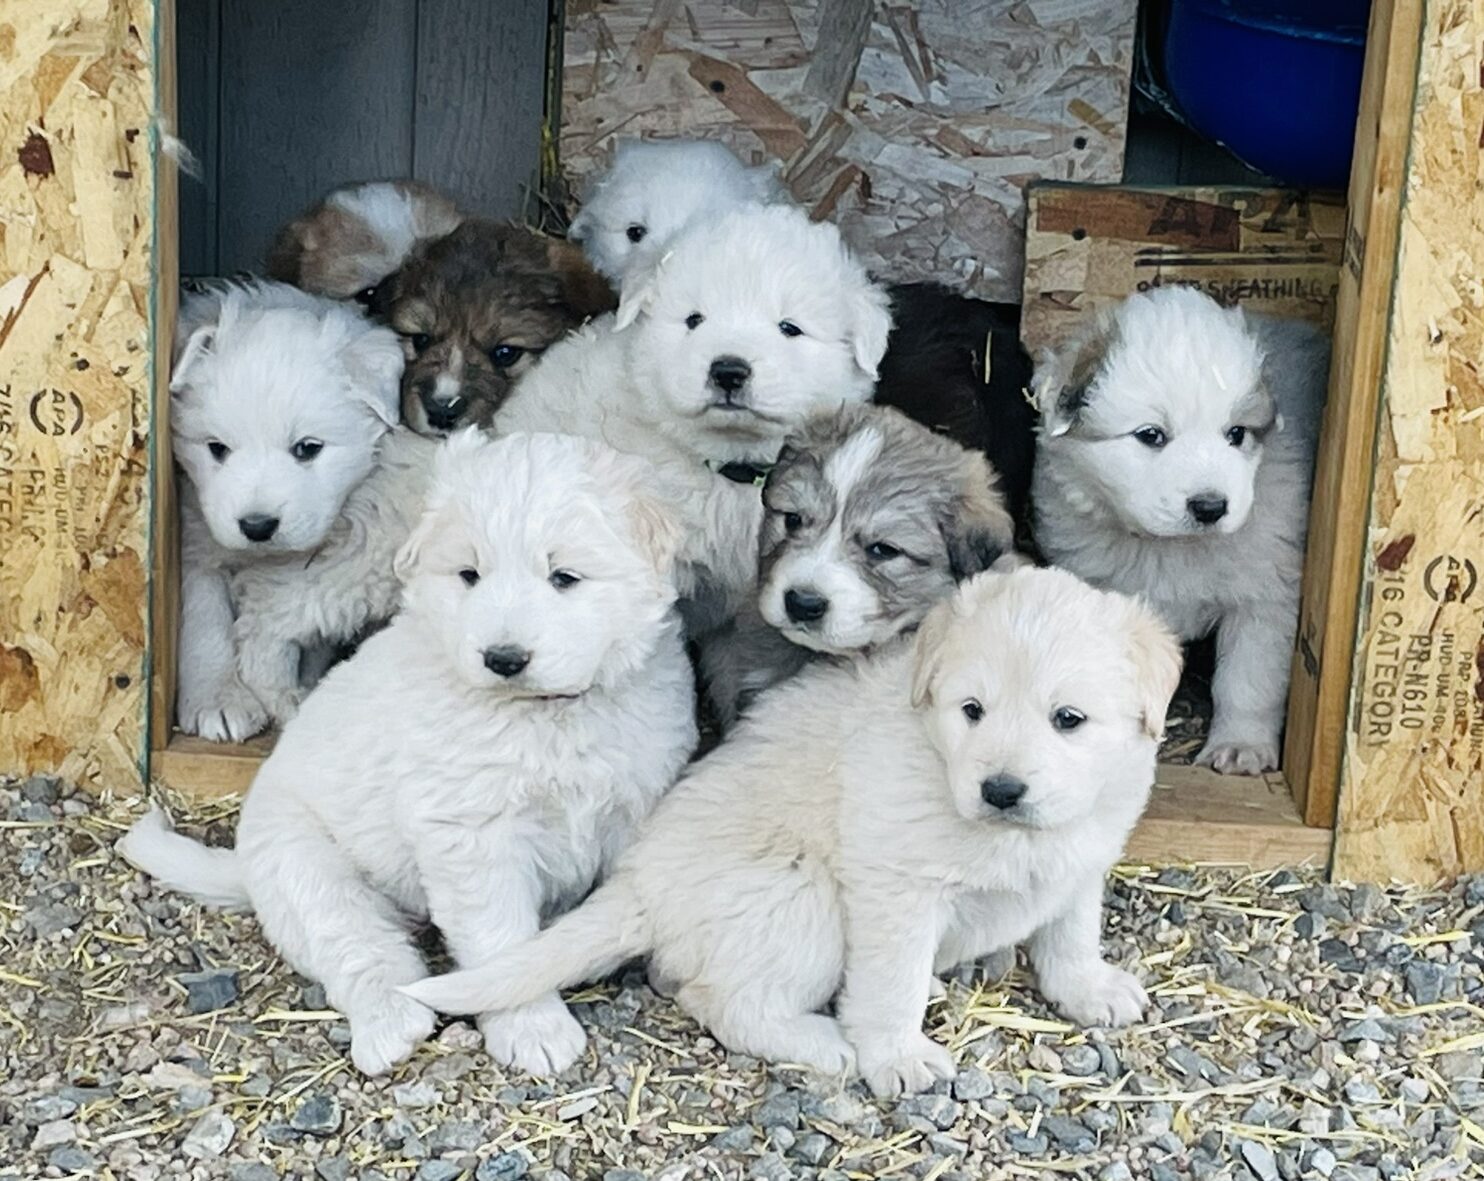 Four week old Colorado mountain dog puppies